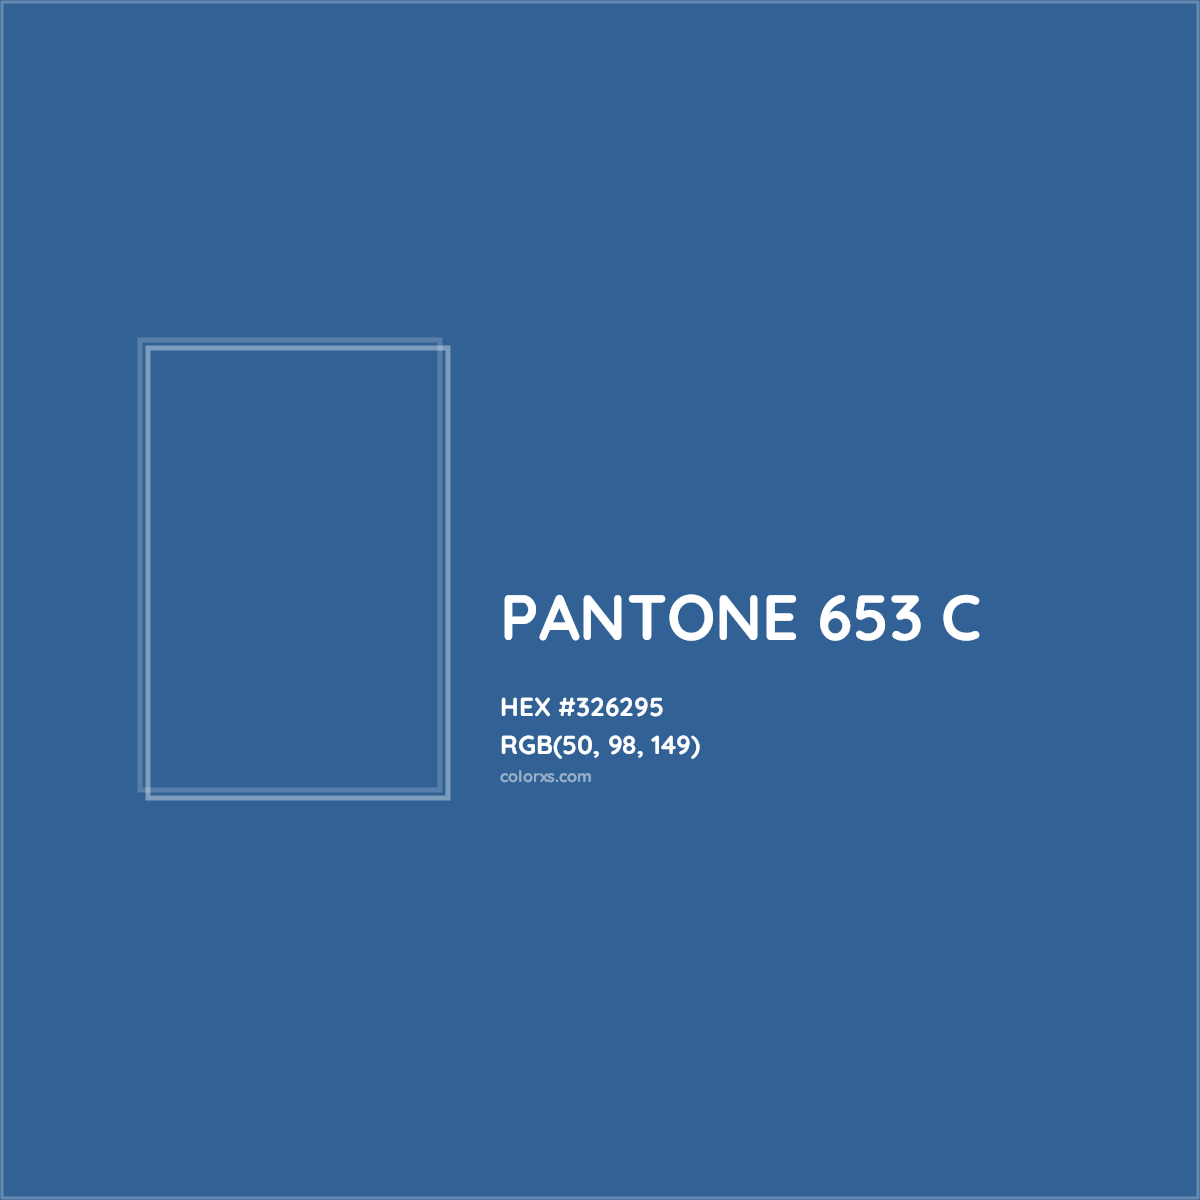 HEX #326295 PANTONE 653 C CMS Pantone PMS - Color Code